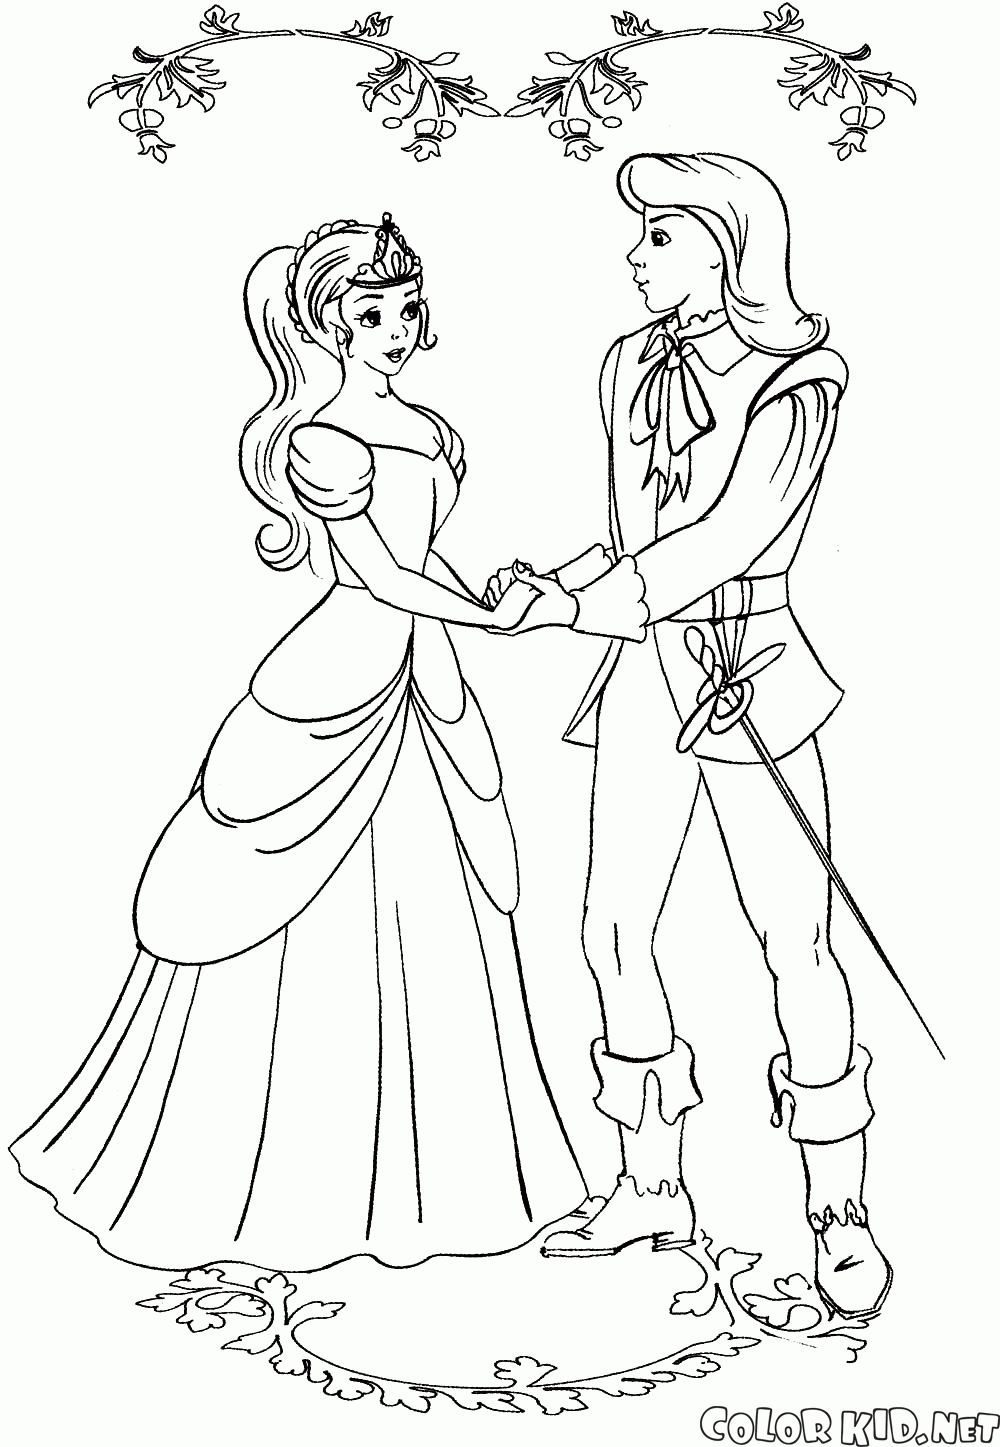 The prince met the princess